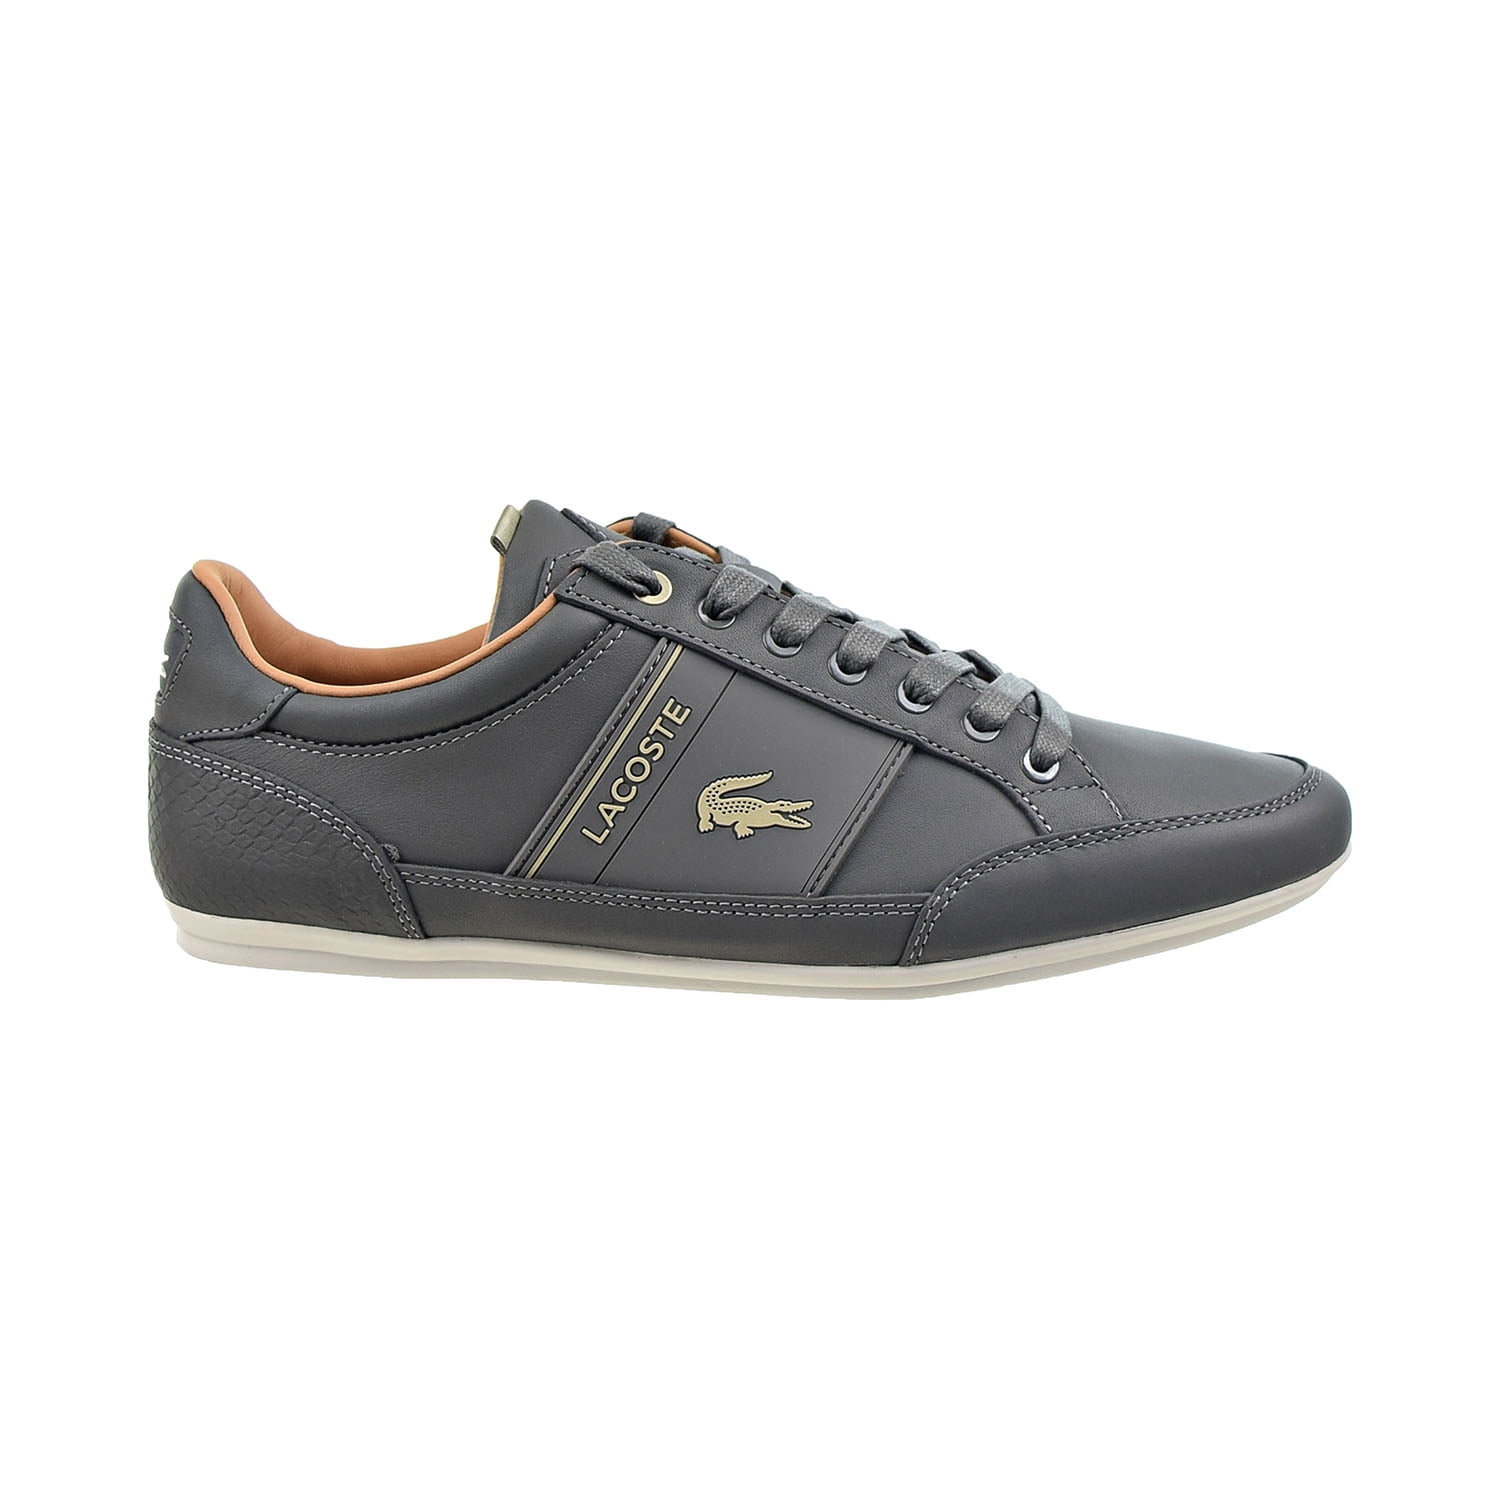 haspel Muildier Robijn Lacoste Chaymon 321 1 CMA Premium Men's Shoes Dark Grey 7-42cma0010-2m1 -  Walmart.com